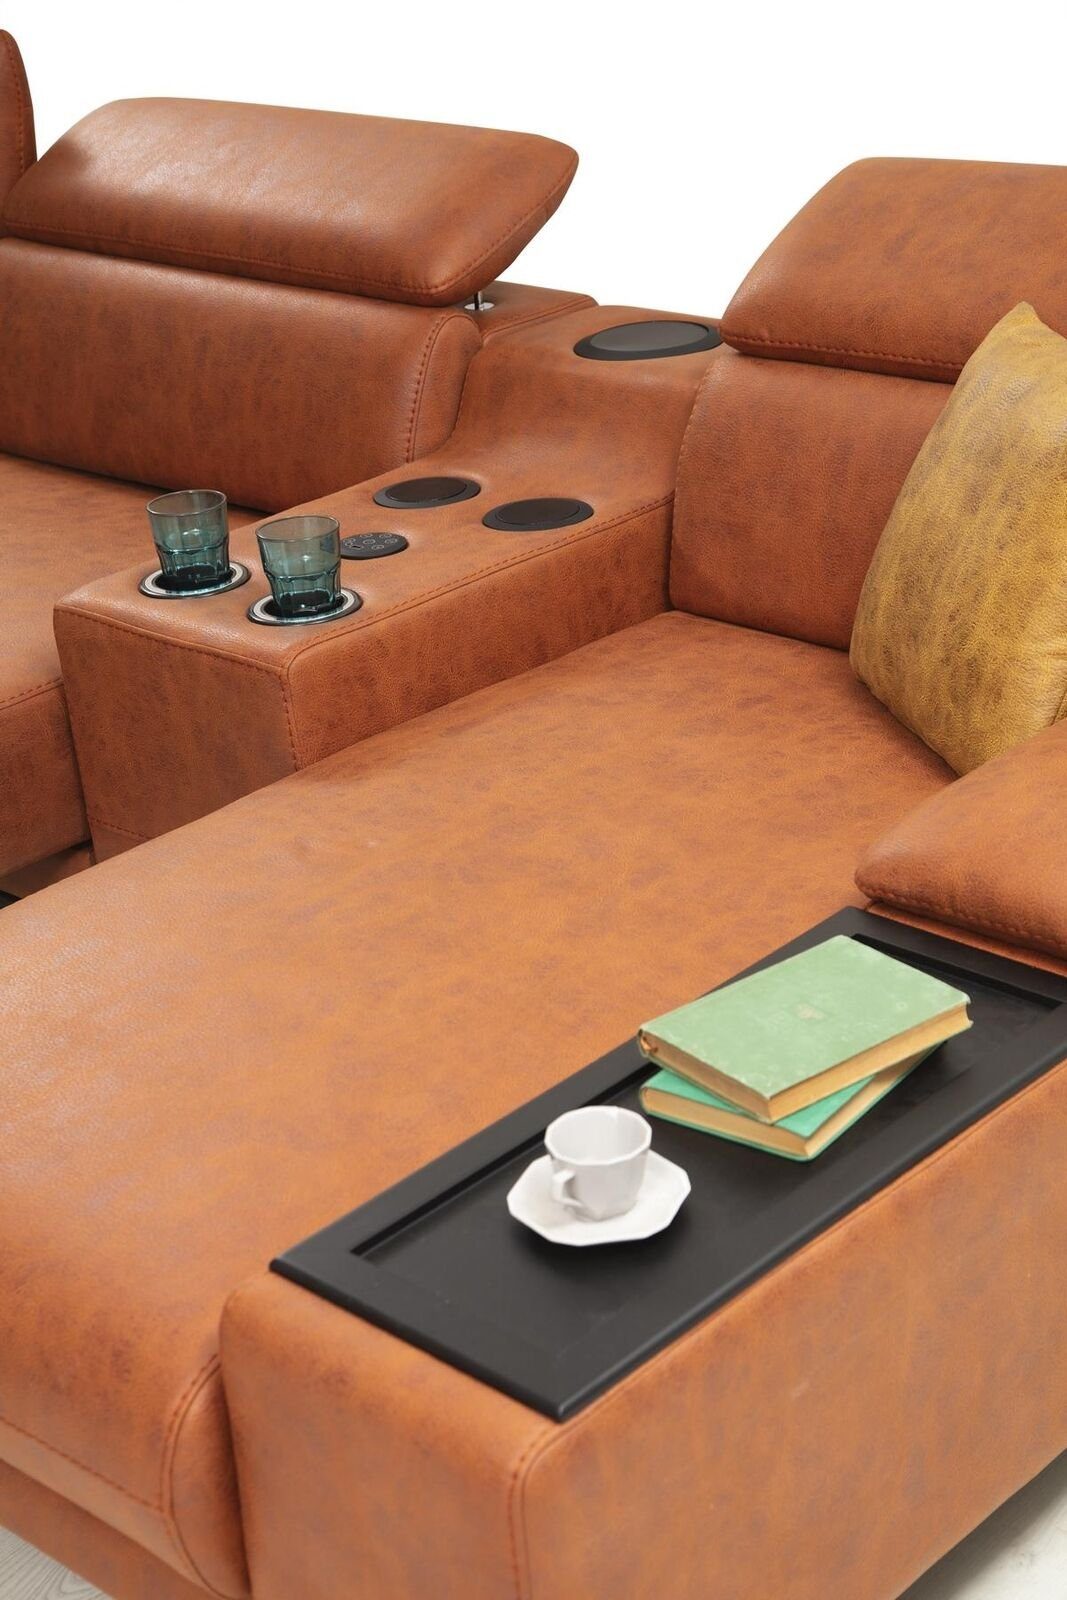 Europa Modern Textil, Polster JVmoebel Design Ecksofa L-Form Sofa Ecksofa 4 Luxus in Couch Teile, Made